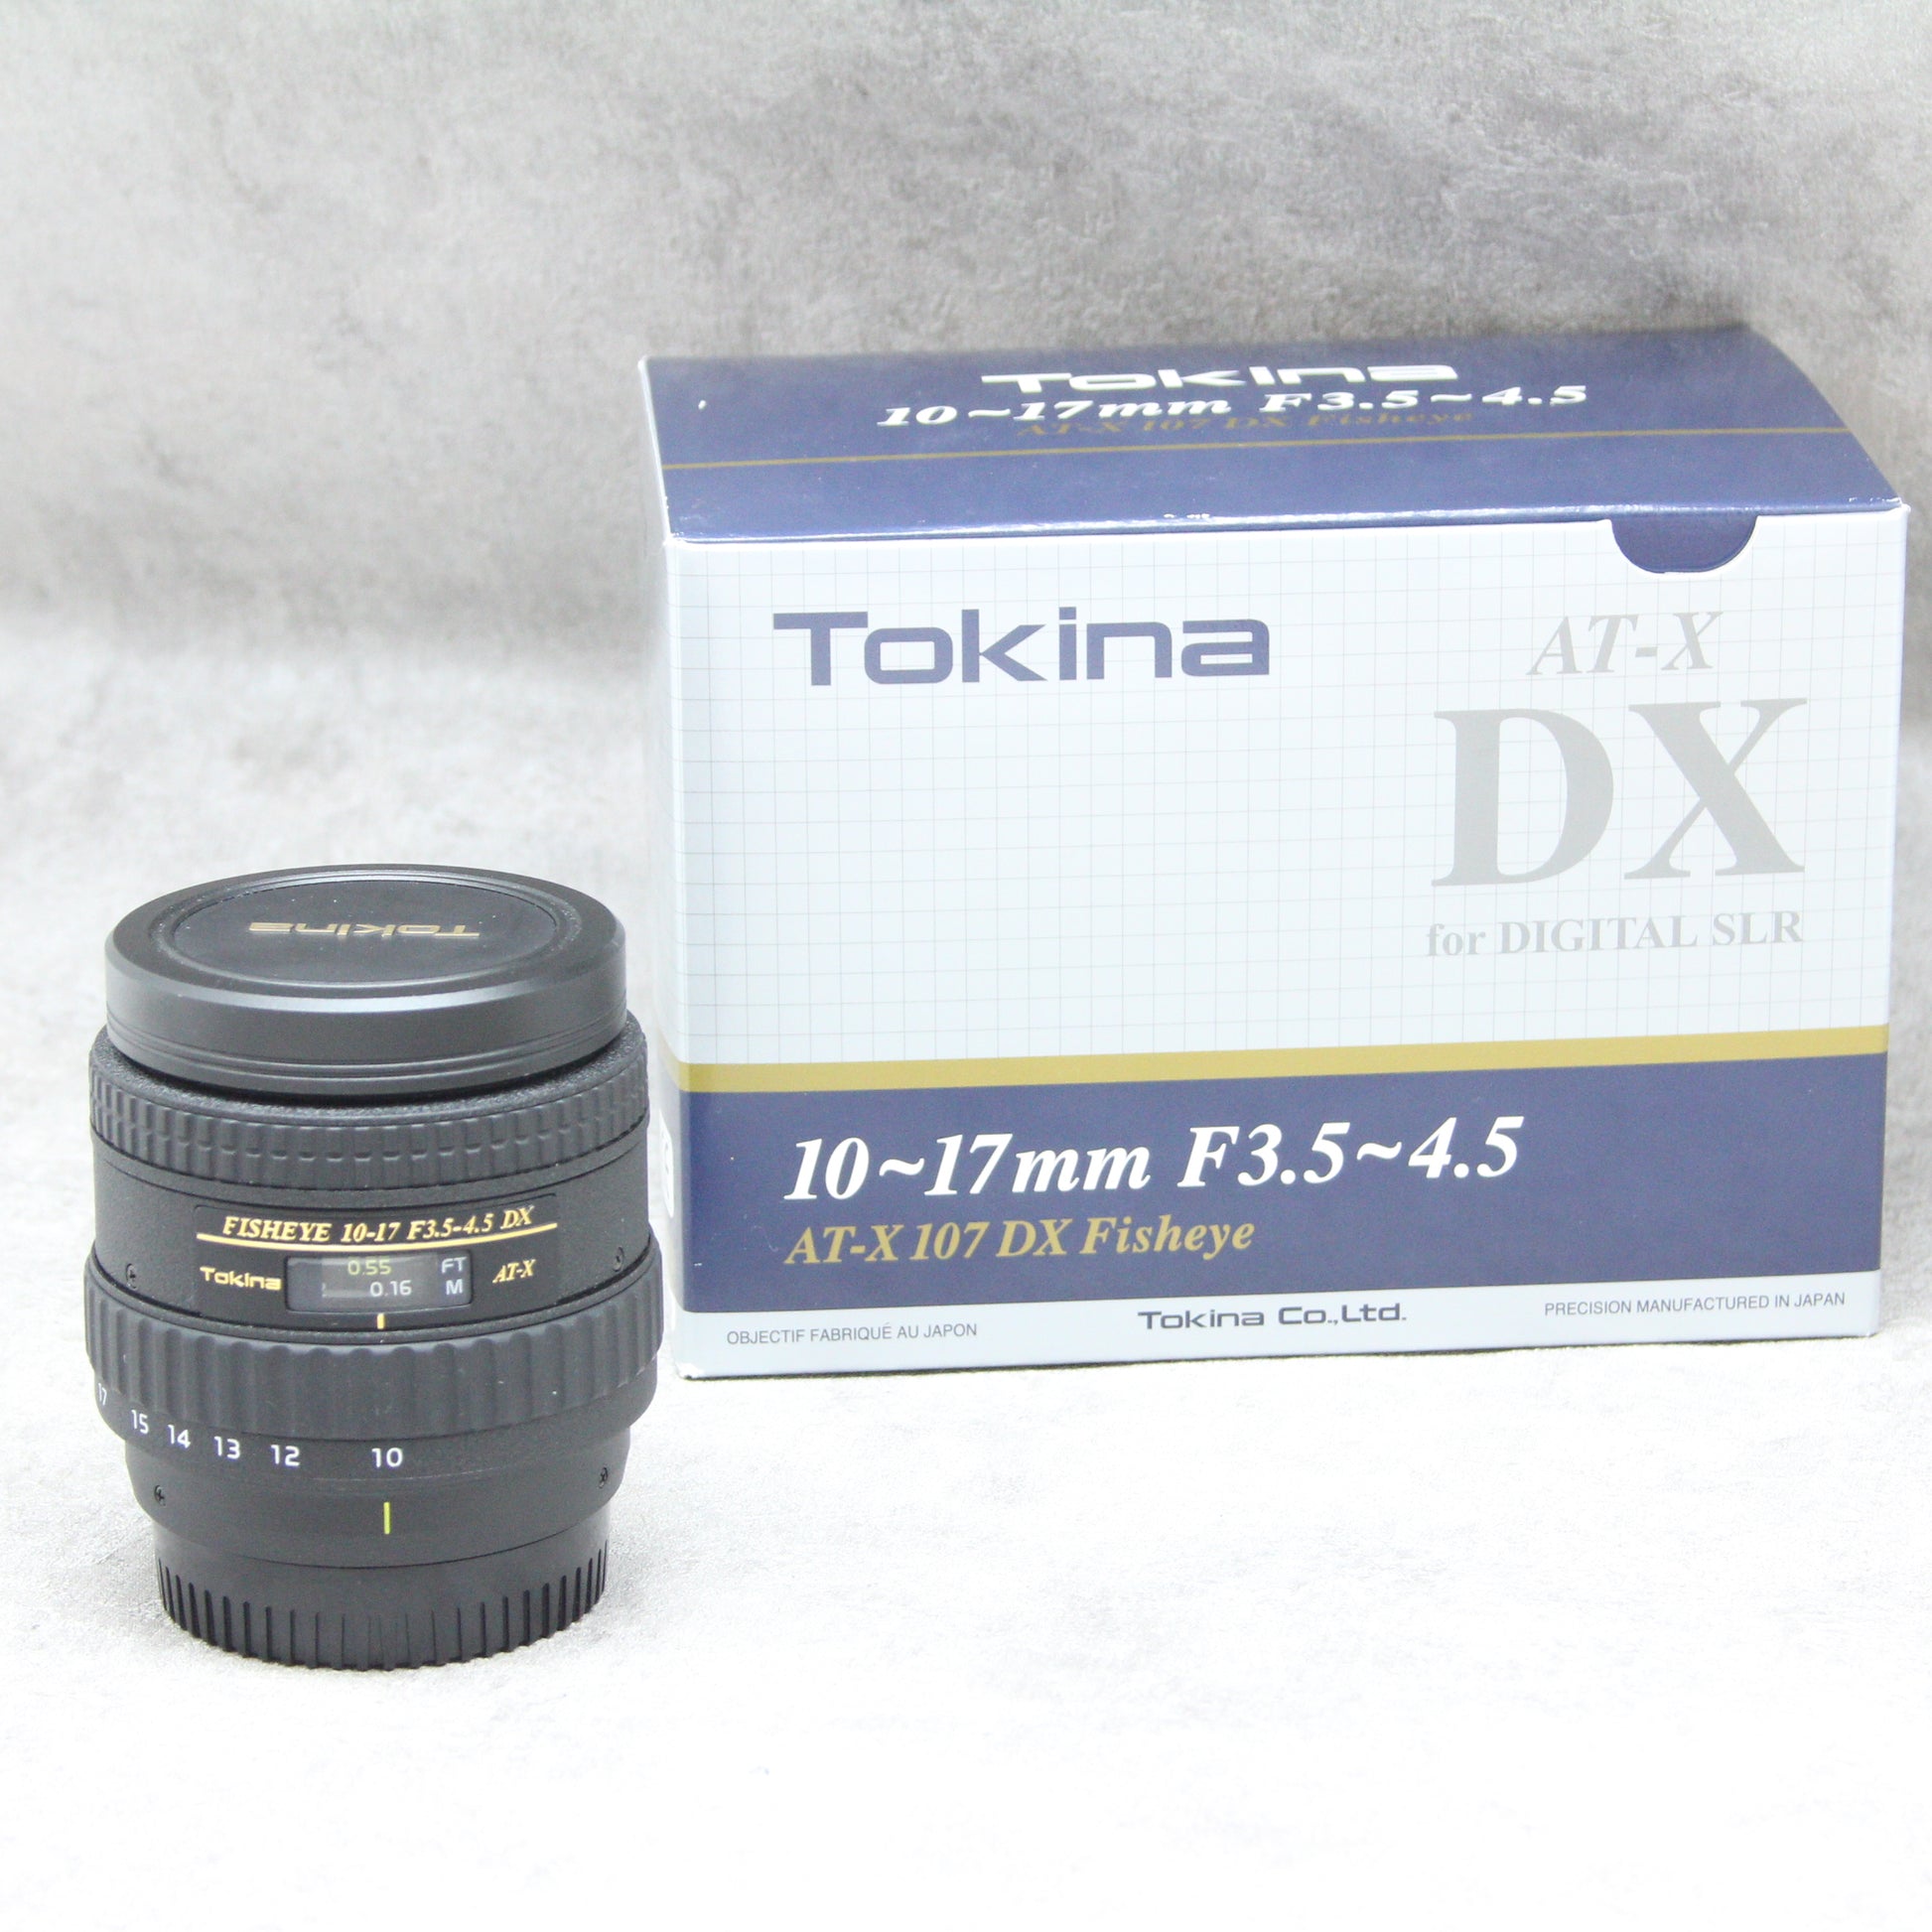 Tokina AT-X 107 DX FishEye ニコン用 | kensysgas.com